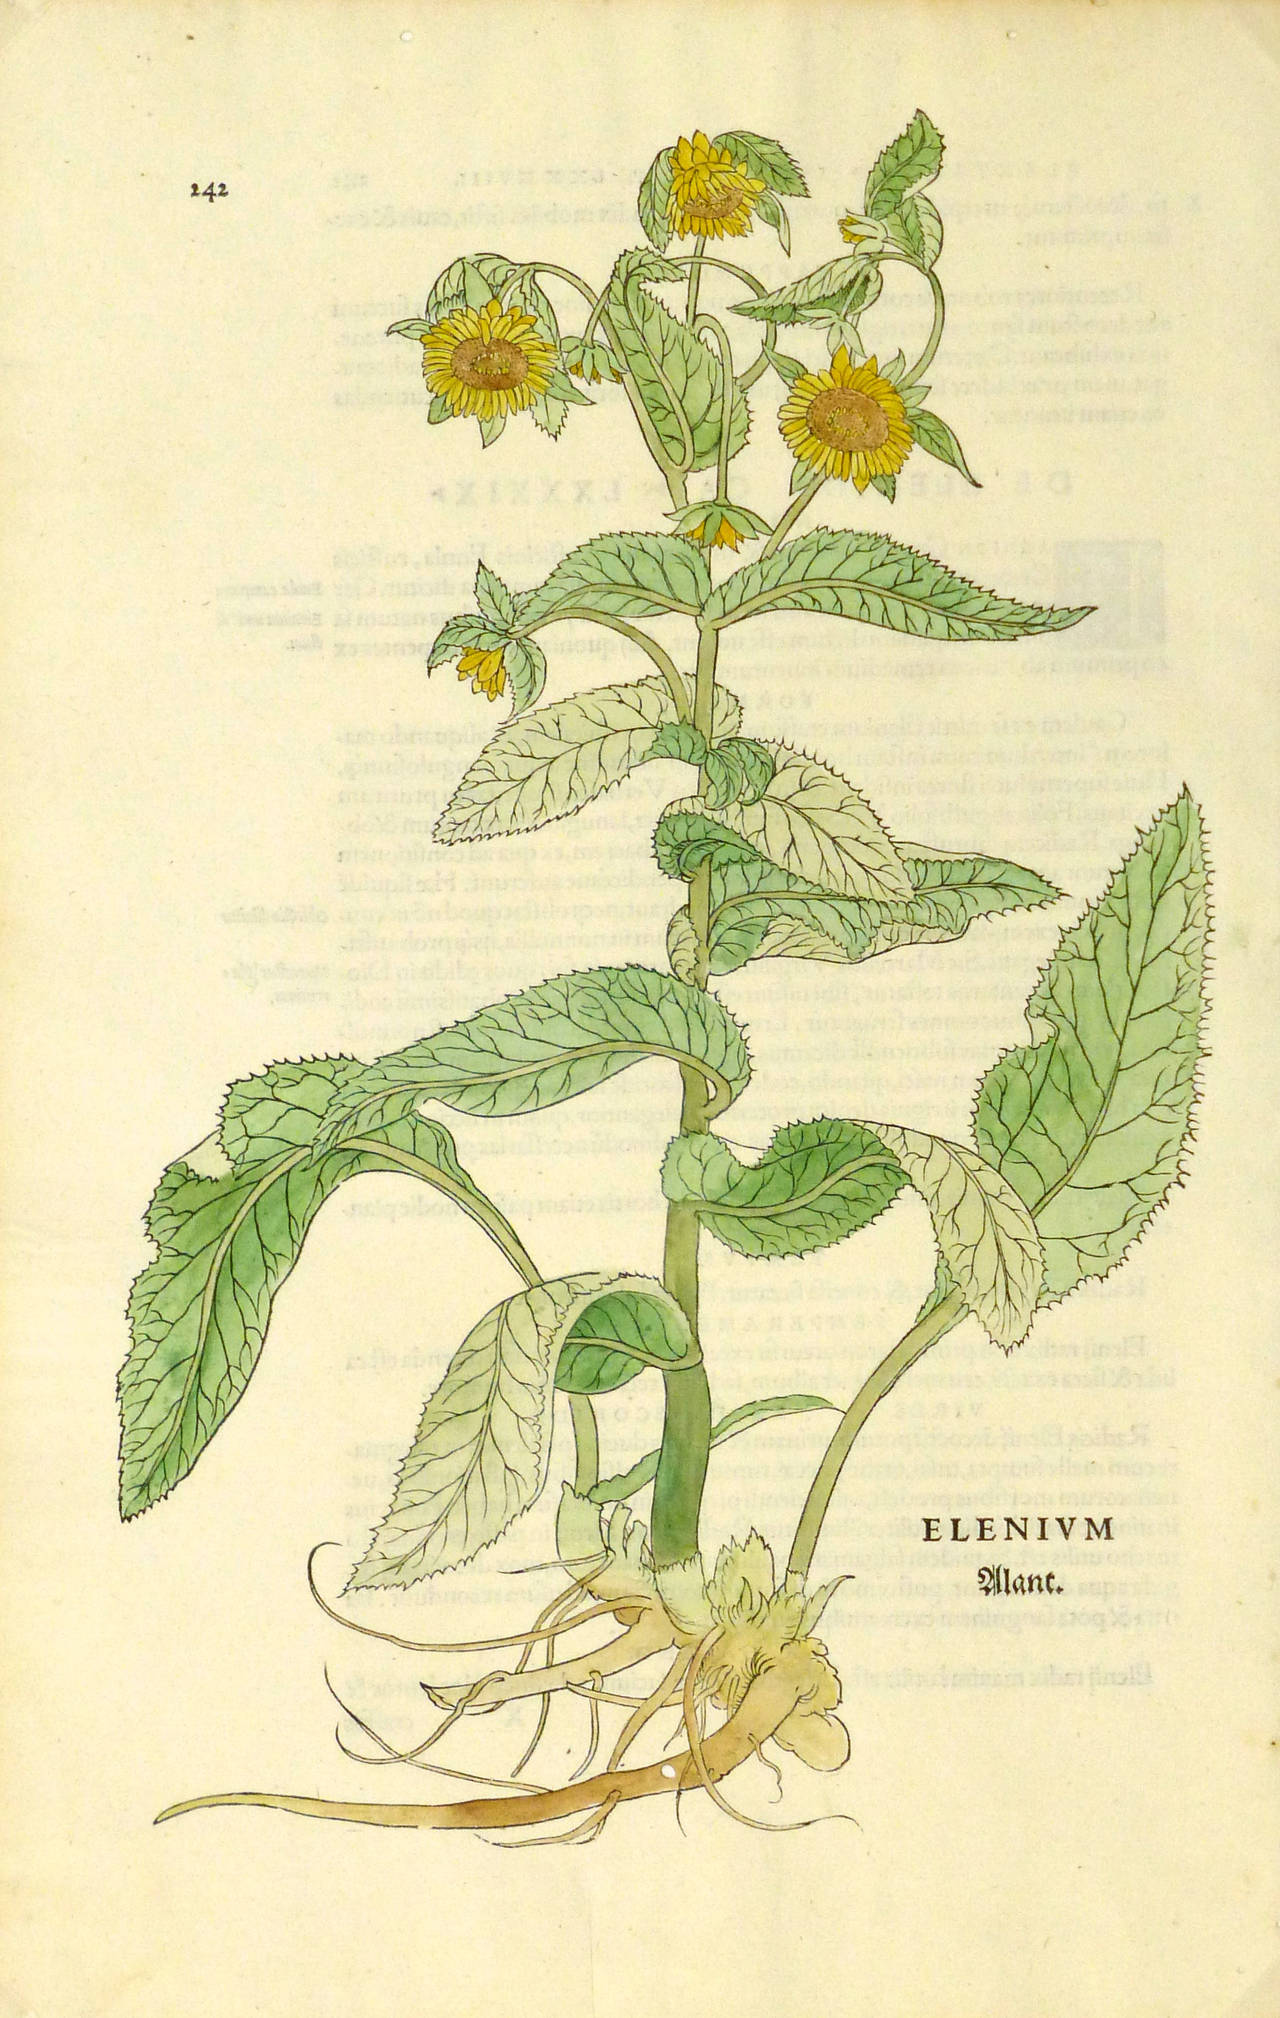 Leonart Fuchs Print - 16th Century - Sunflowers